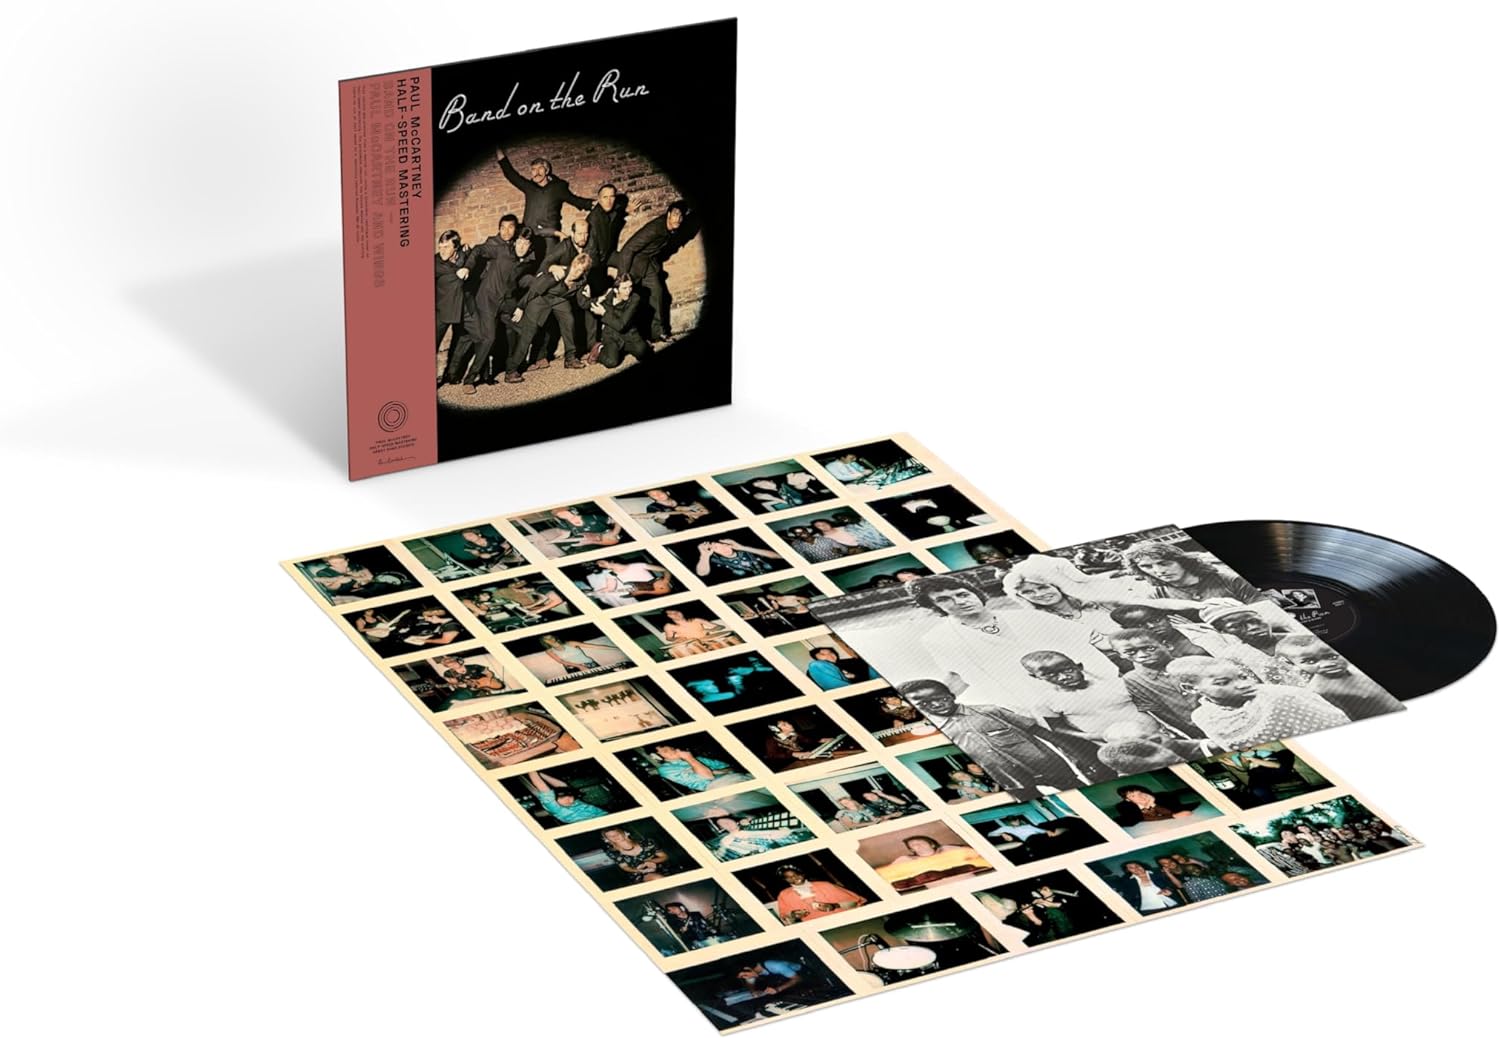 Paul McCartney / Wings - Band On The Run (Half-Speed Master) (vinyl record)